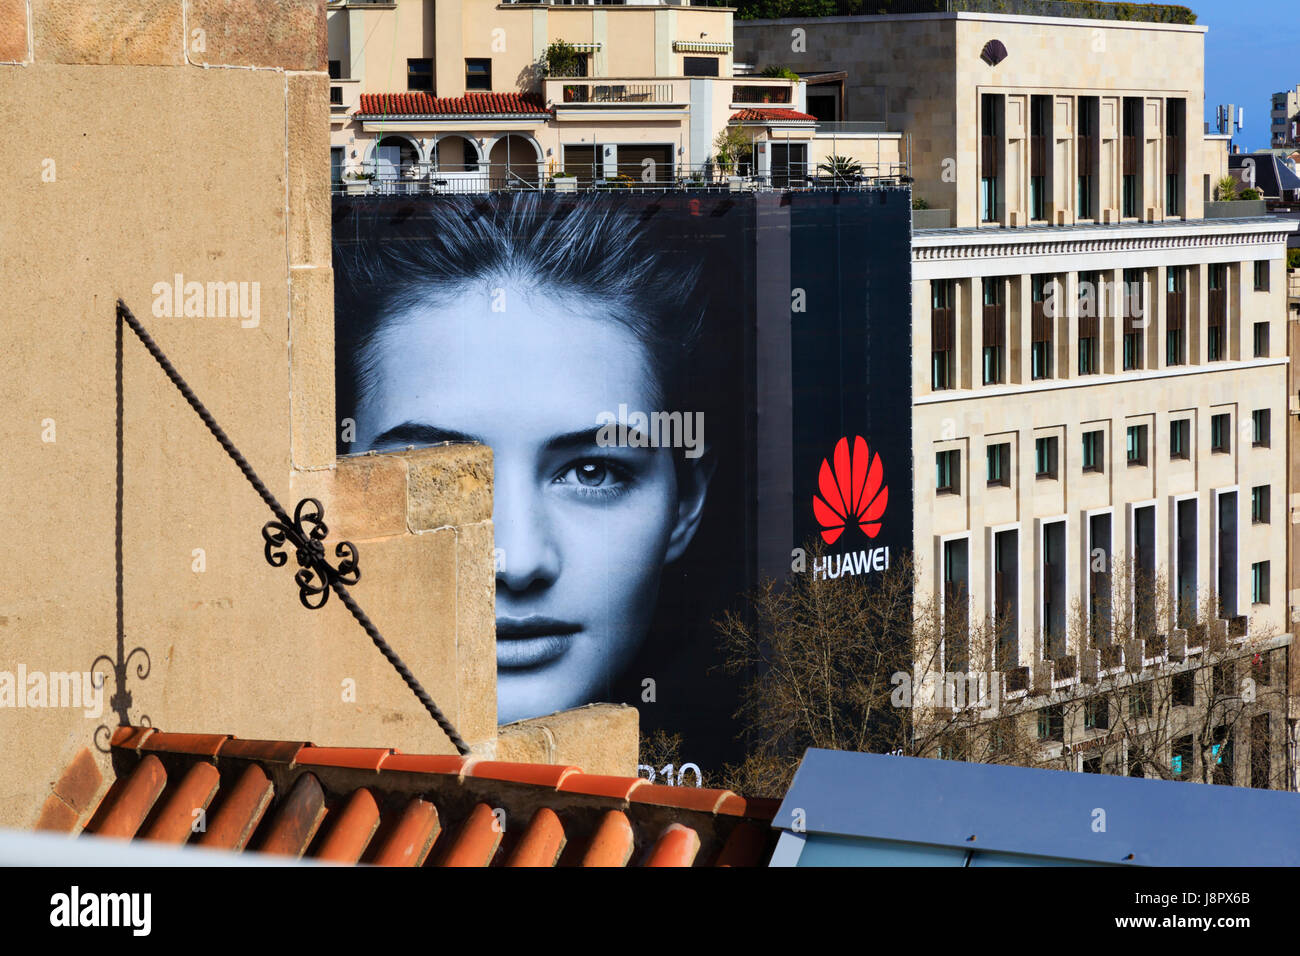 Massive advertising screen on scaffolding for Huawei mobile phone, Barcelona, Catalunya, Spain Stock Photo